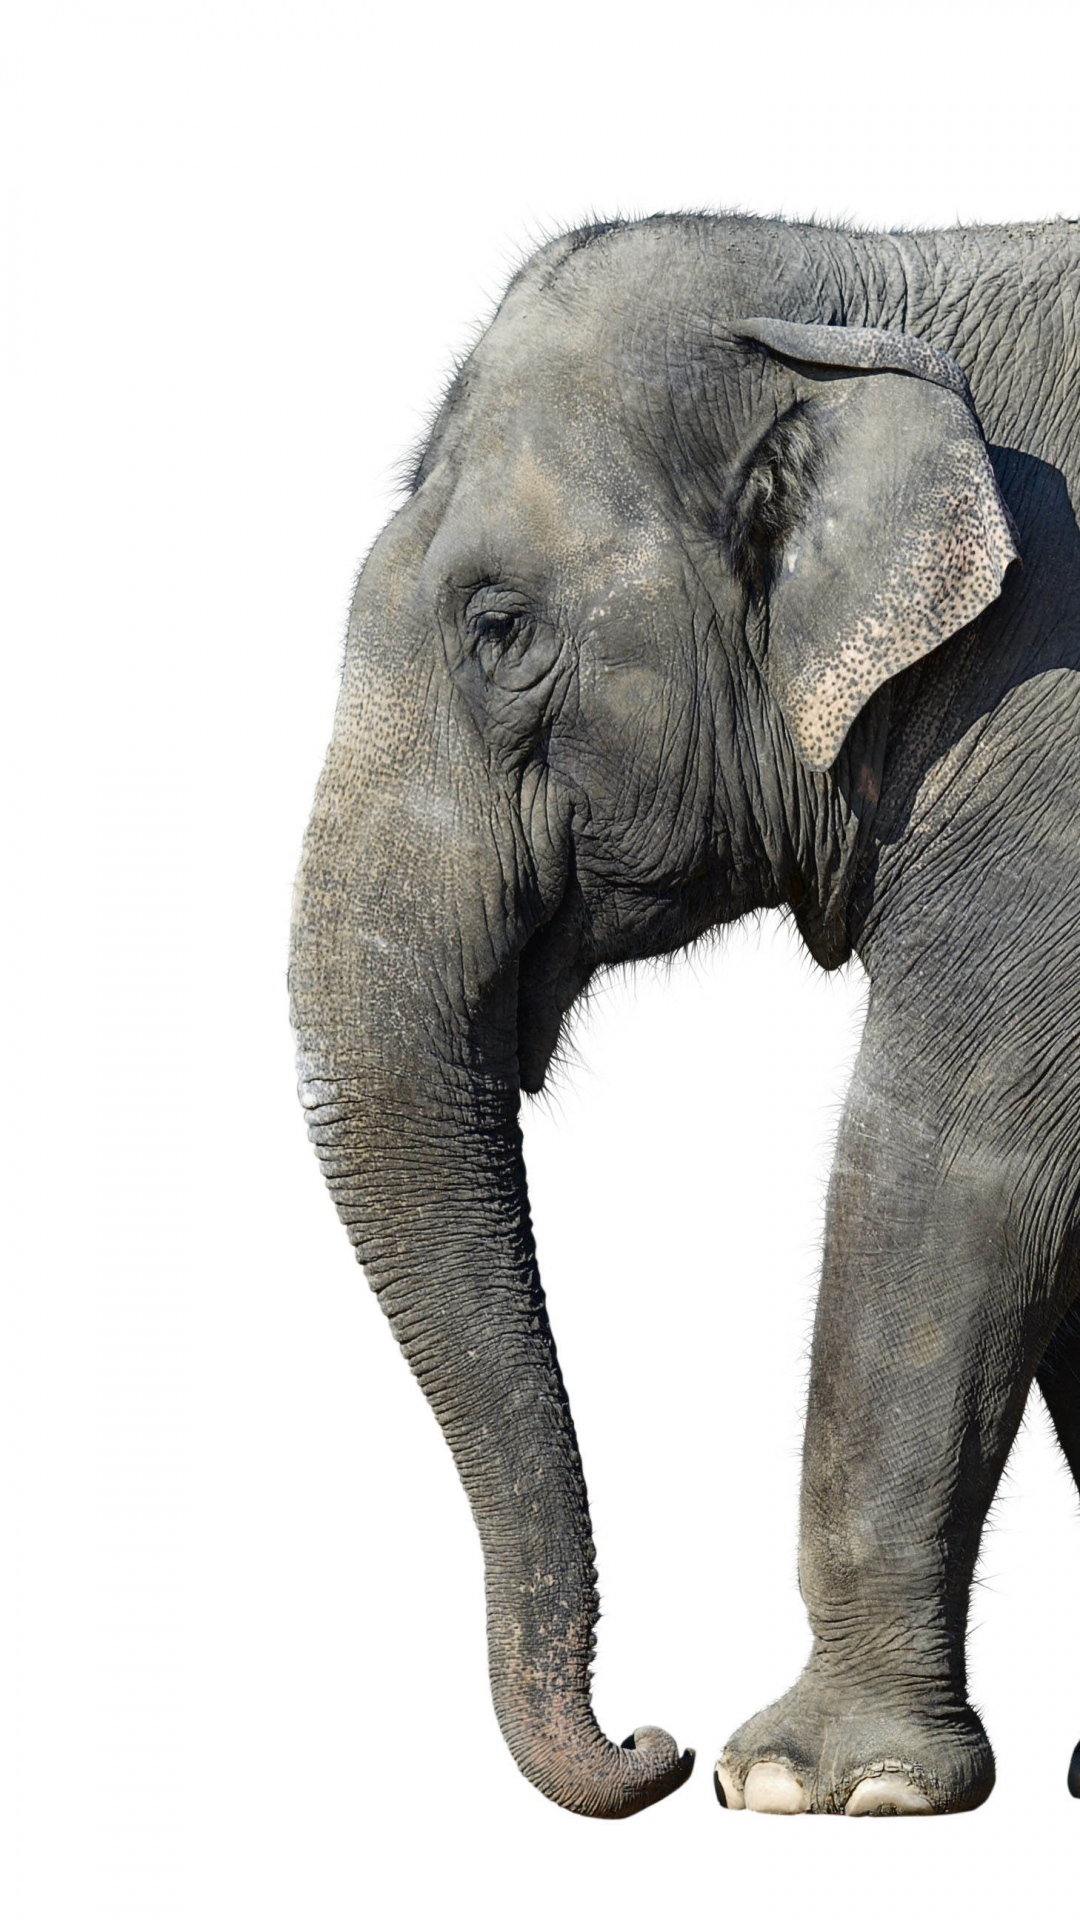 elefante live wallpaper,elefante,elefantes y mamuts,elefante indio,animal terrestre,elefante africano